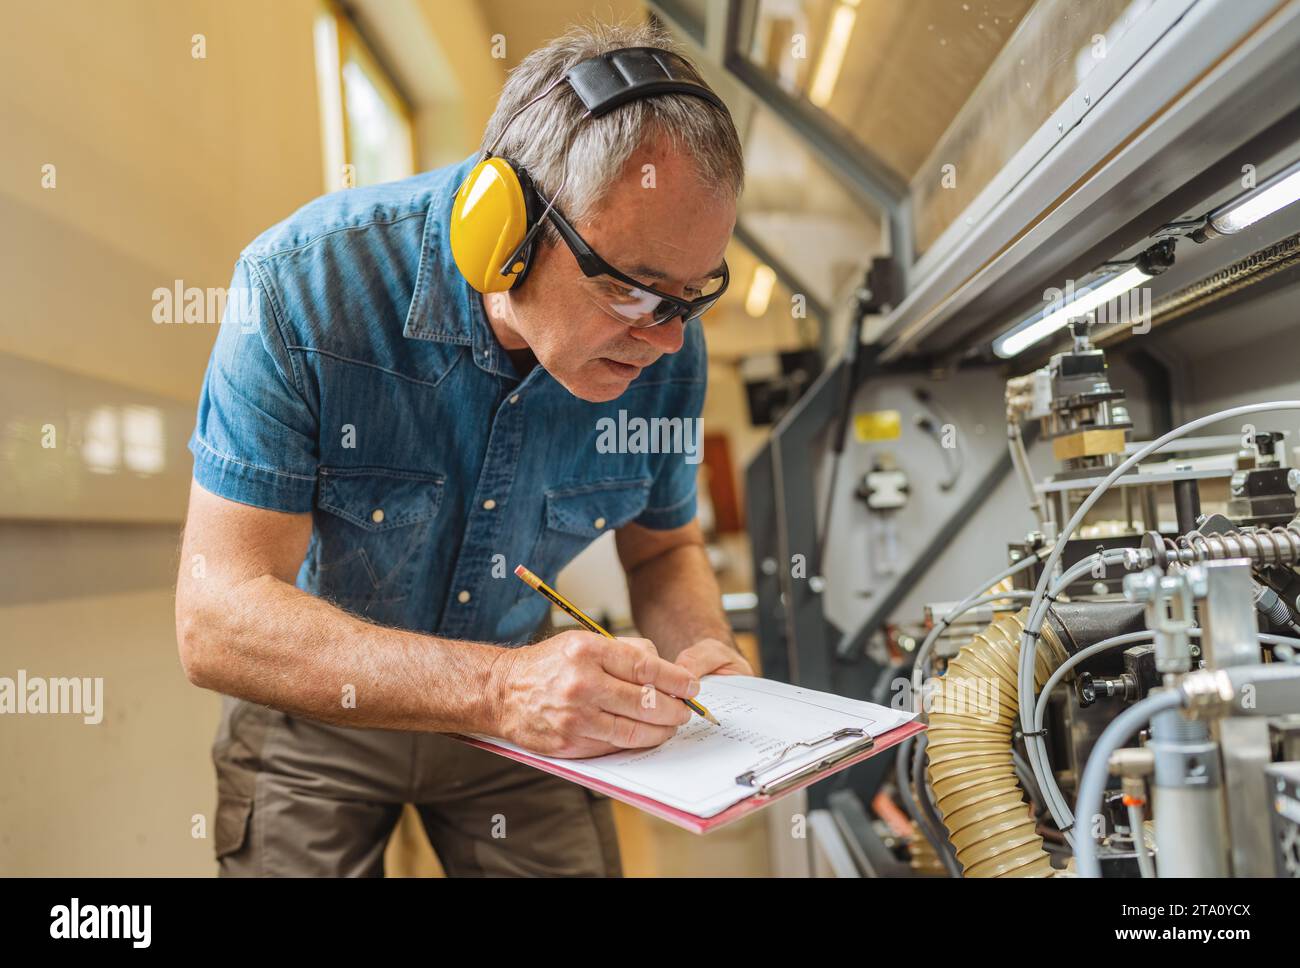 Techniker mit Gehörschutzbeschriftung auf Klemmbrett im industriellen Umfeld Stockfoto